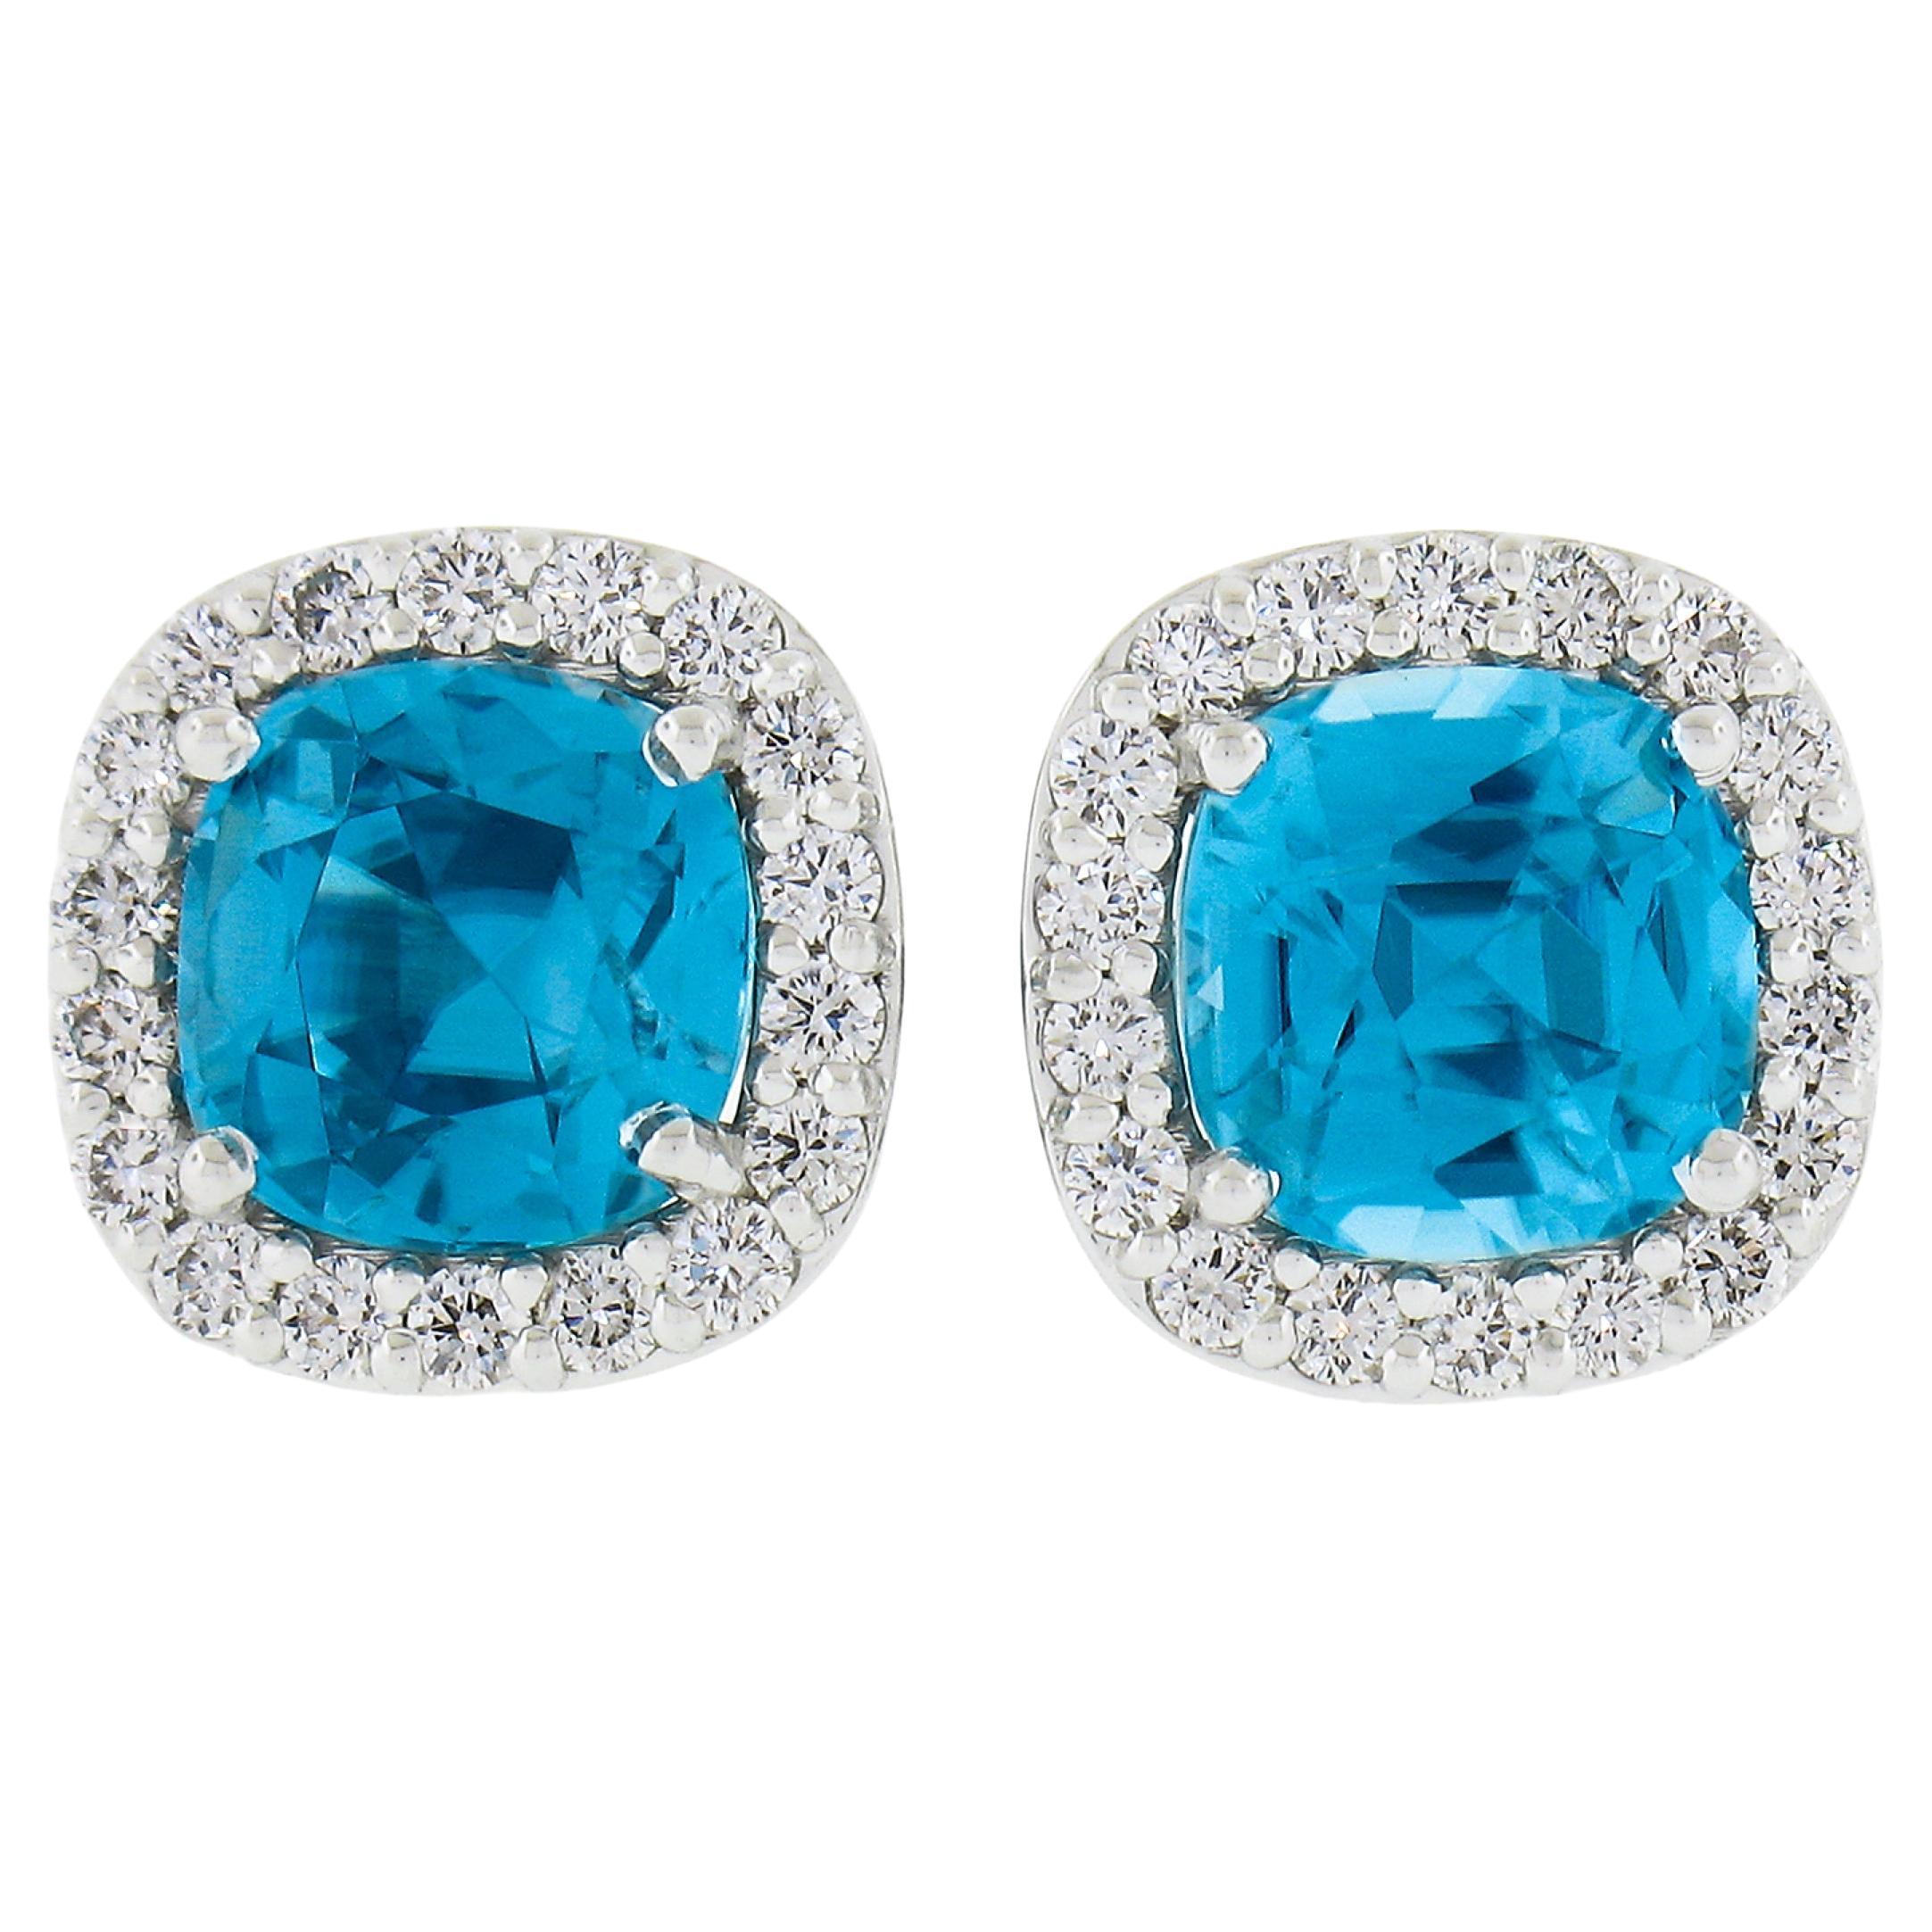 New 18k White Gold 5.61ctw Cushion Cut Blue Zircon & Diamond Halo Stud Earrings For Sale